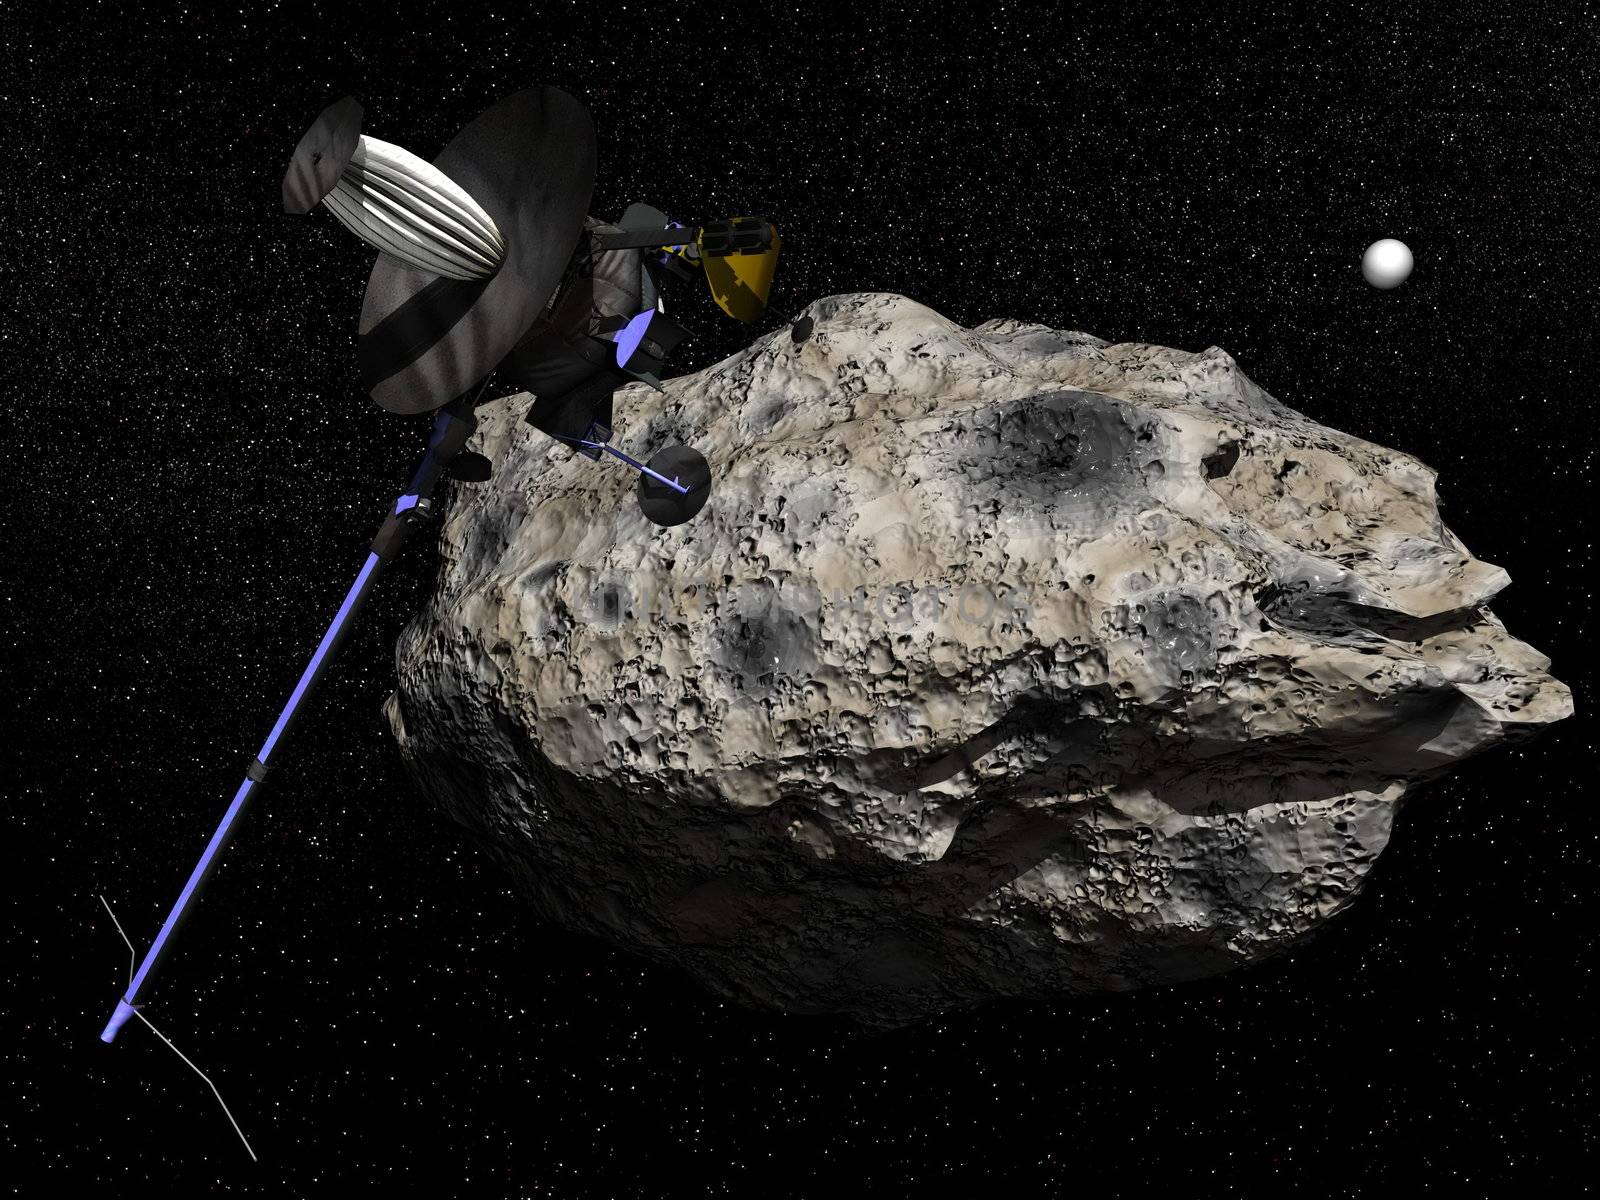 Galileo spacecraft discovering Dactyl orbiting the asteroid Ida by Elenaphotos21